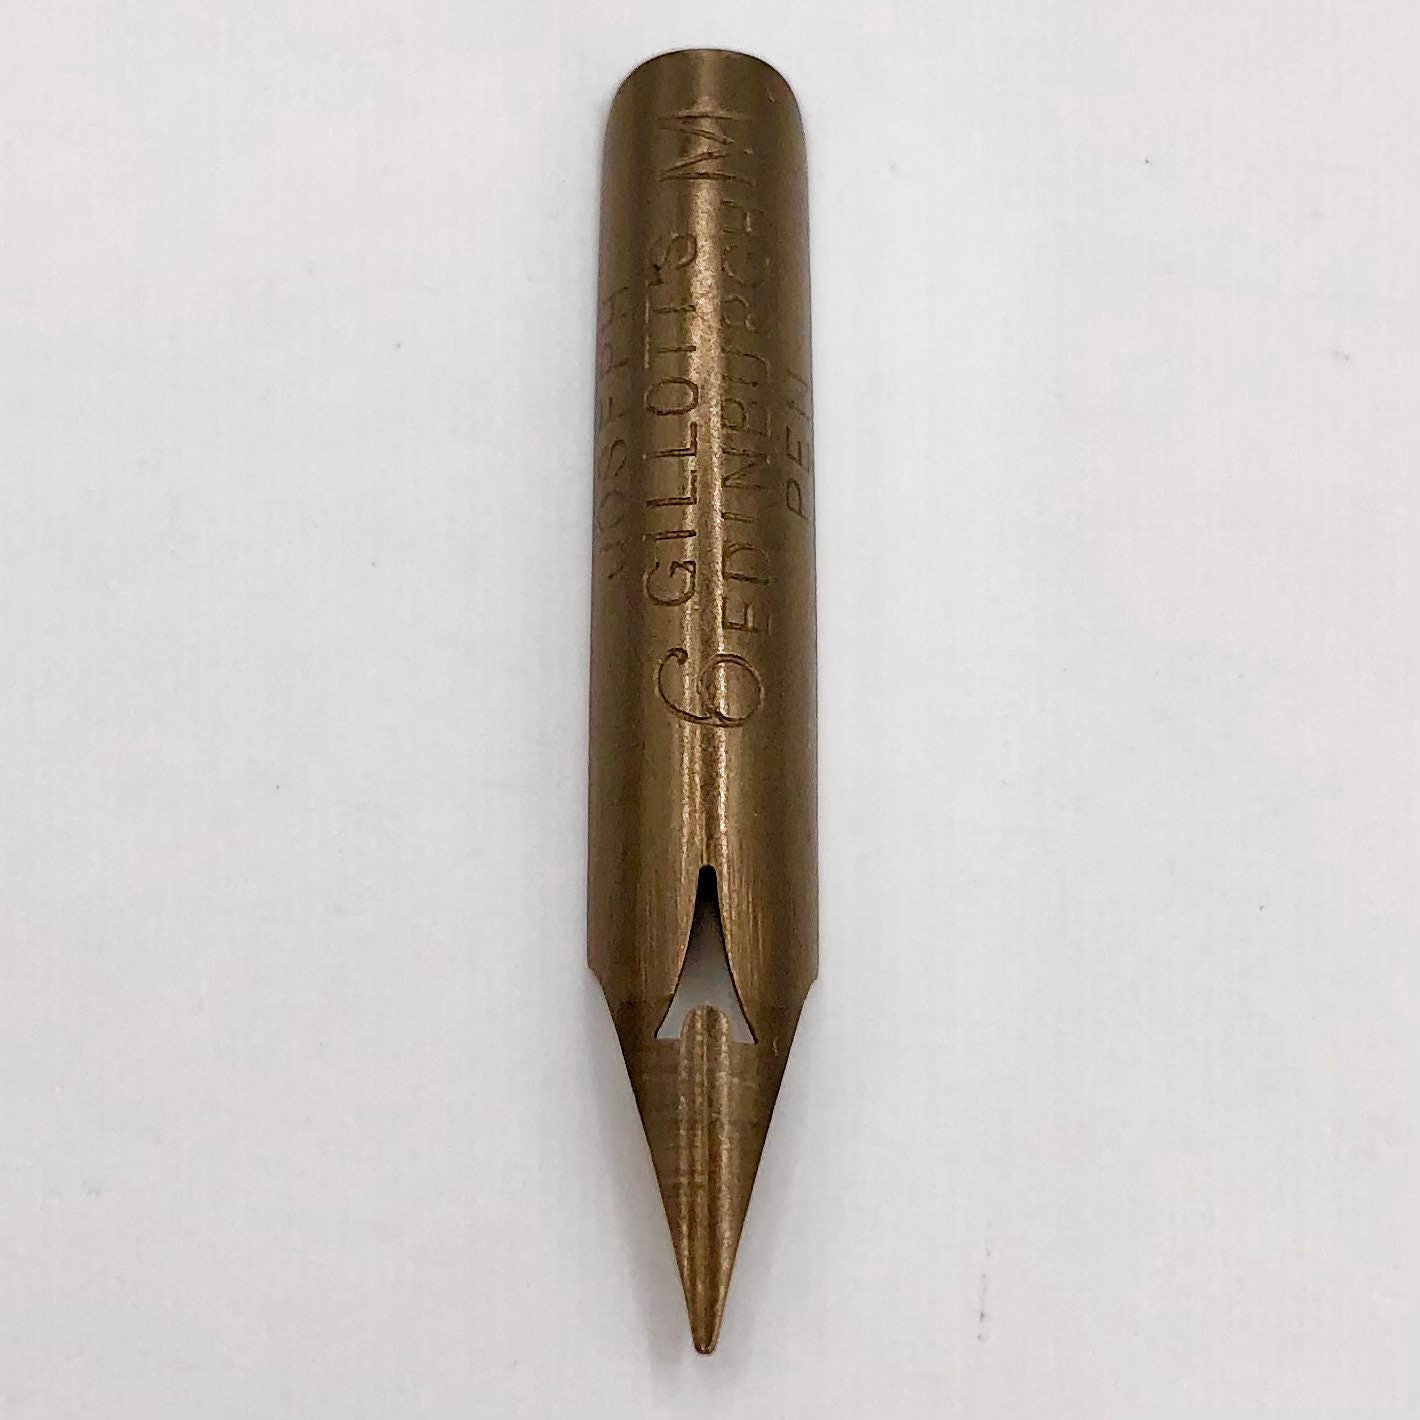 x2 Vintage Joseph Gillott's 290 Lithographic Pen Nibs for Dip Pens  Calligraphy